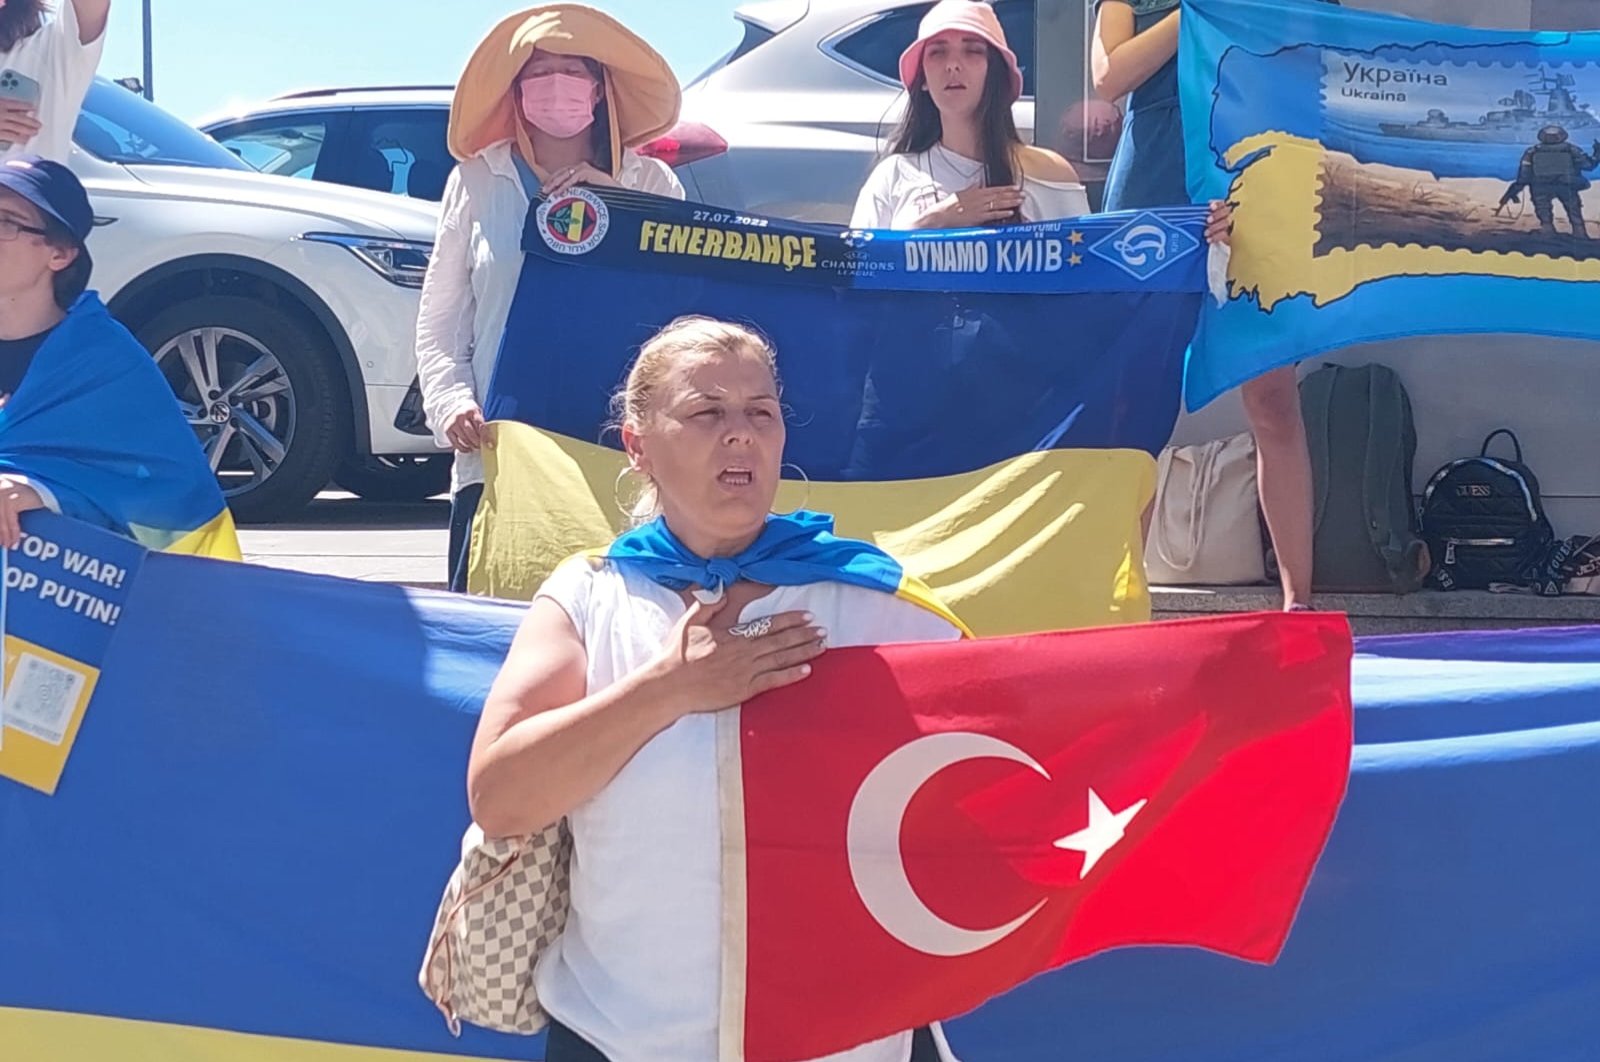 Pertandingan Fenerbahe-Kyiv di Istanbul dibayangi oleh nyanyian ‘Putin’